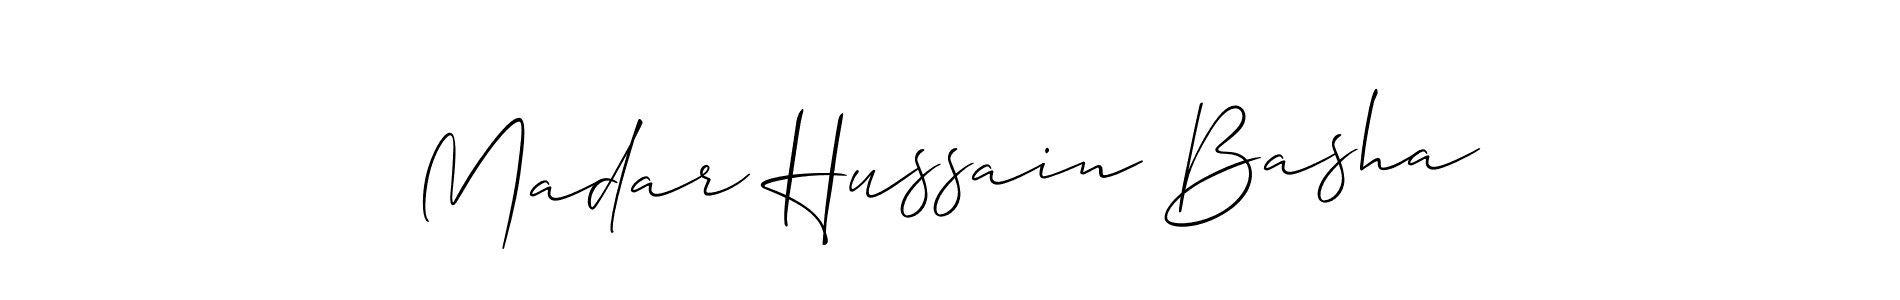 How to Draw Madar Hussain Basha signature style? Allison_Script is a latest design signature styles for name Madar Hussain Basha. Madar Hussain Basha signature style 2 images and pictures png